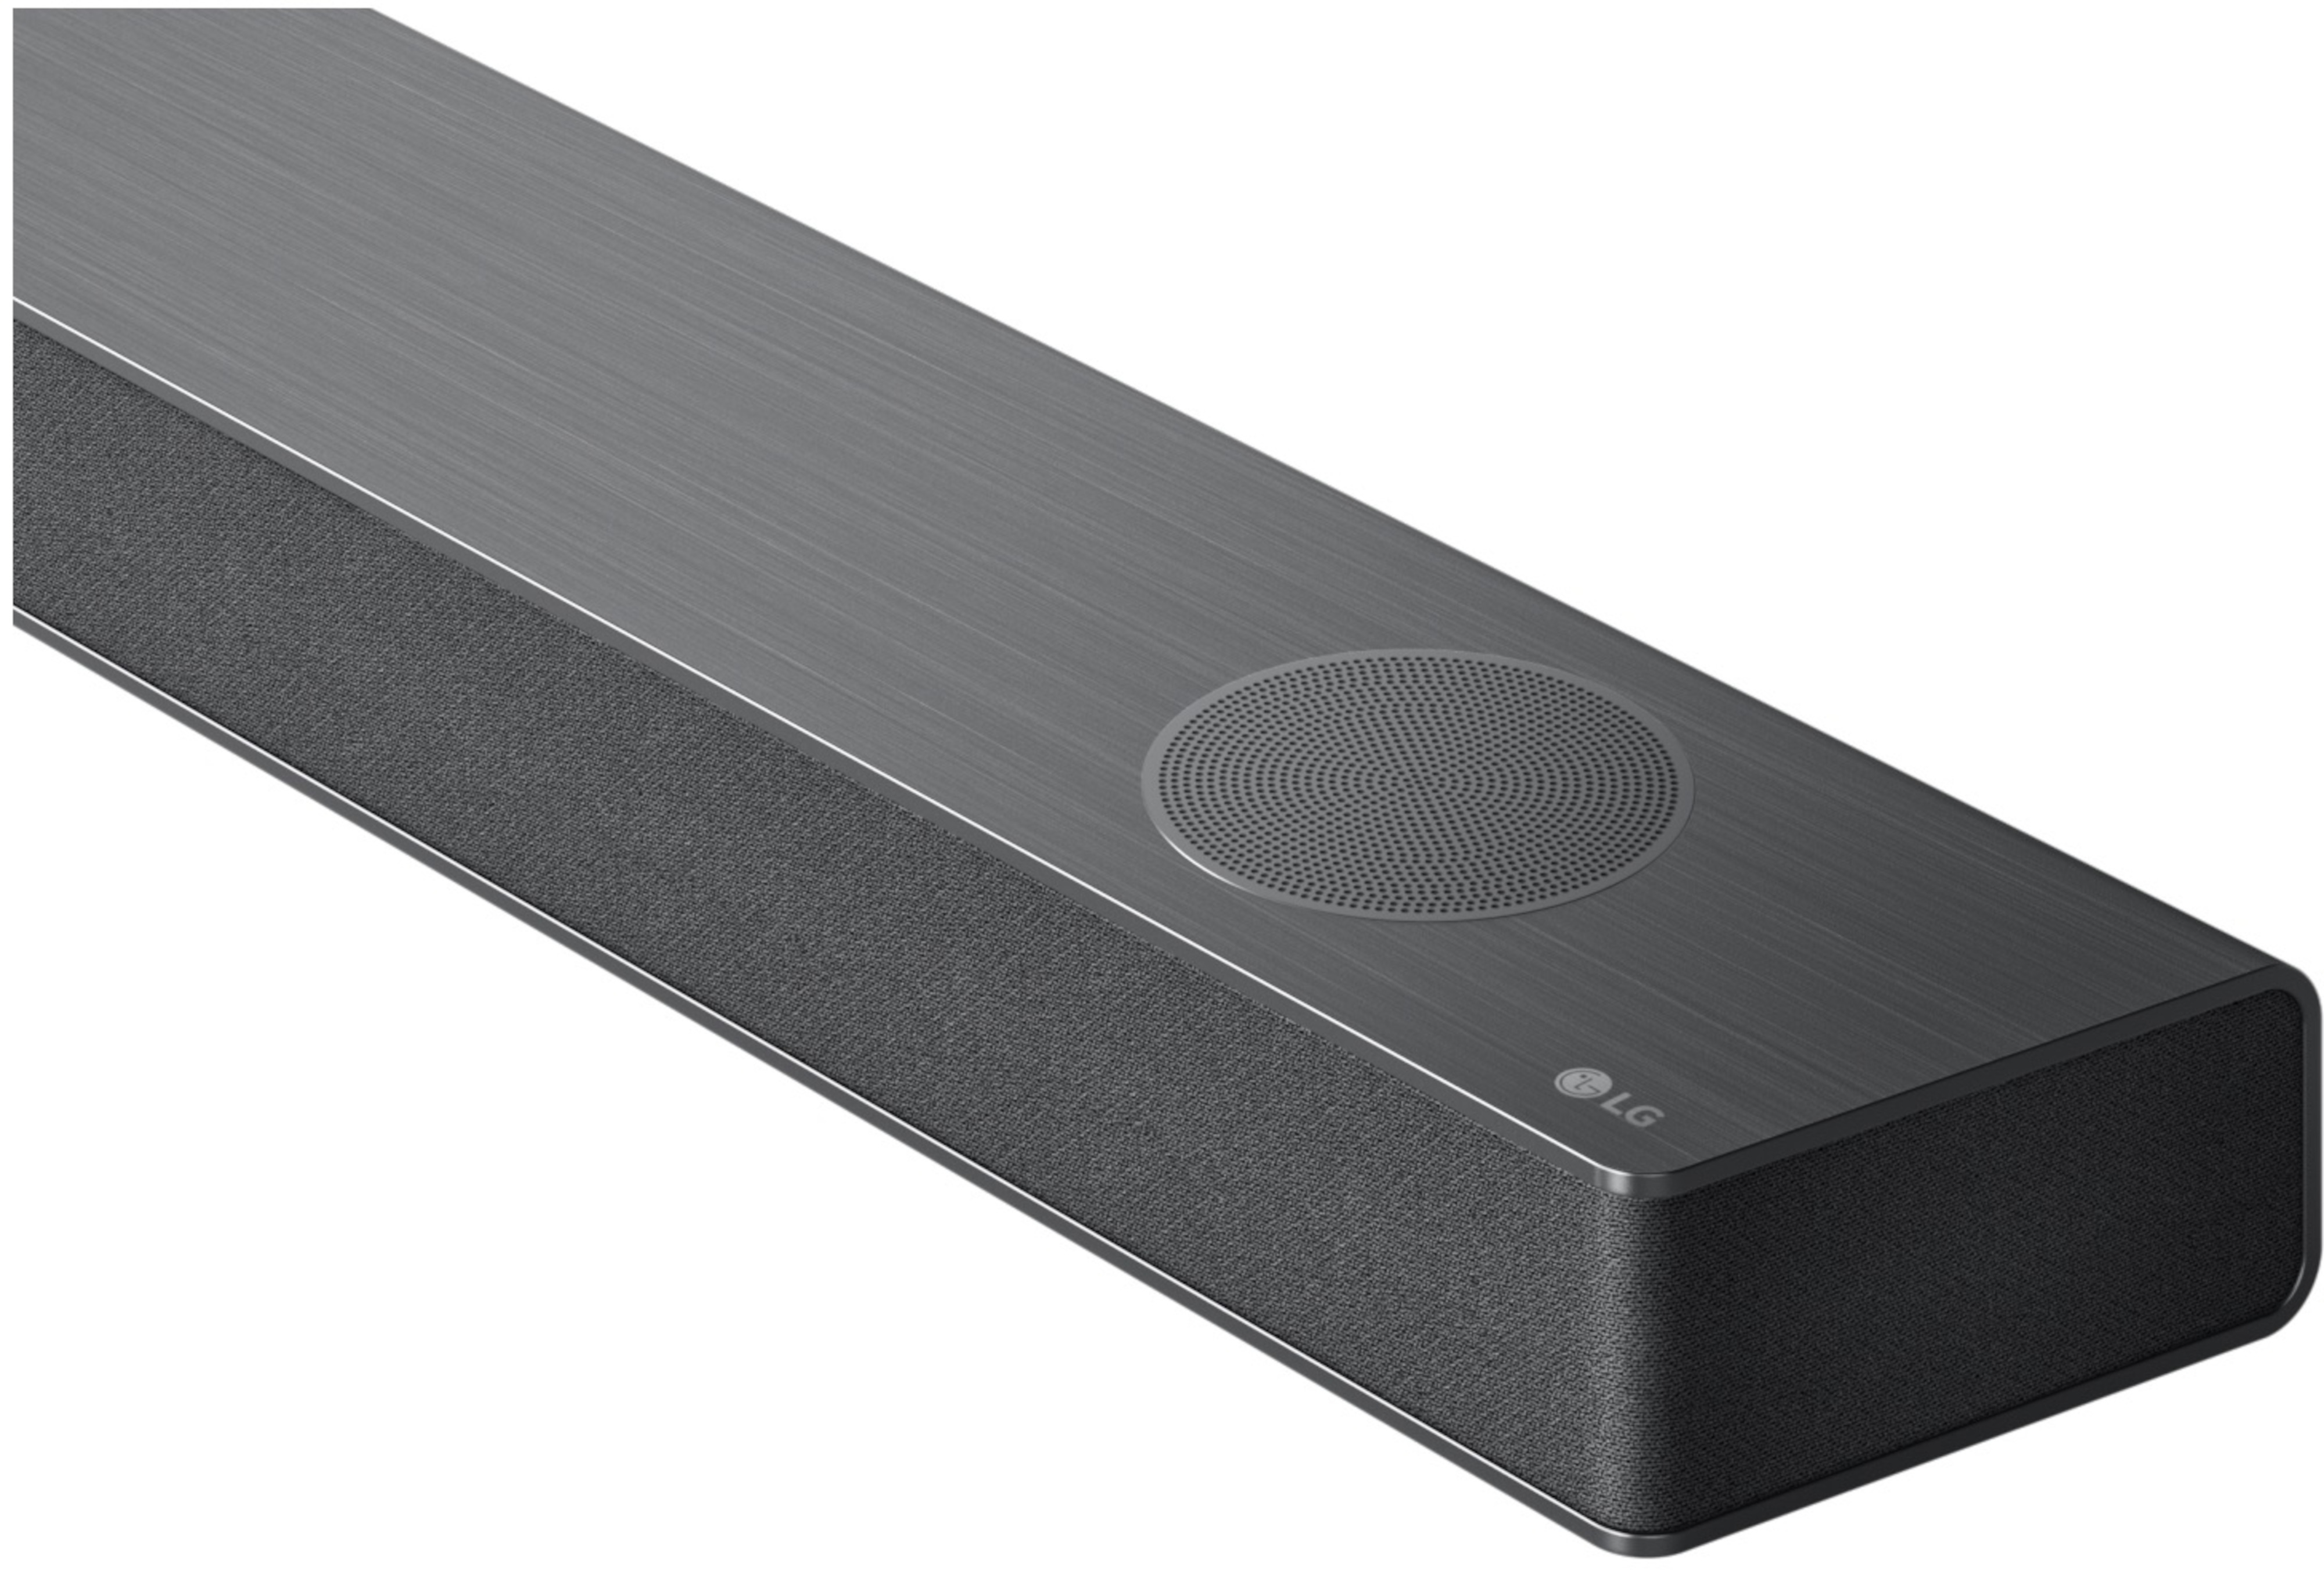 Soundbar, LG Steel Dark DS95QR, Silver